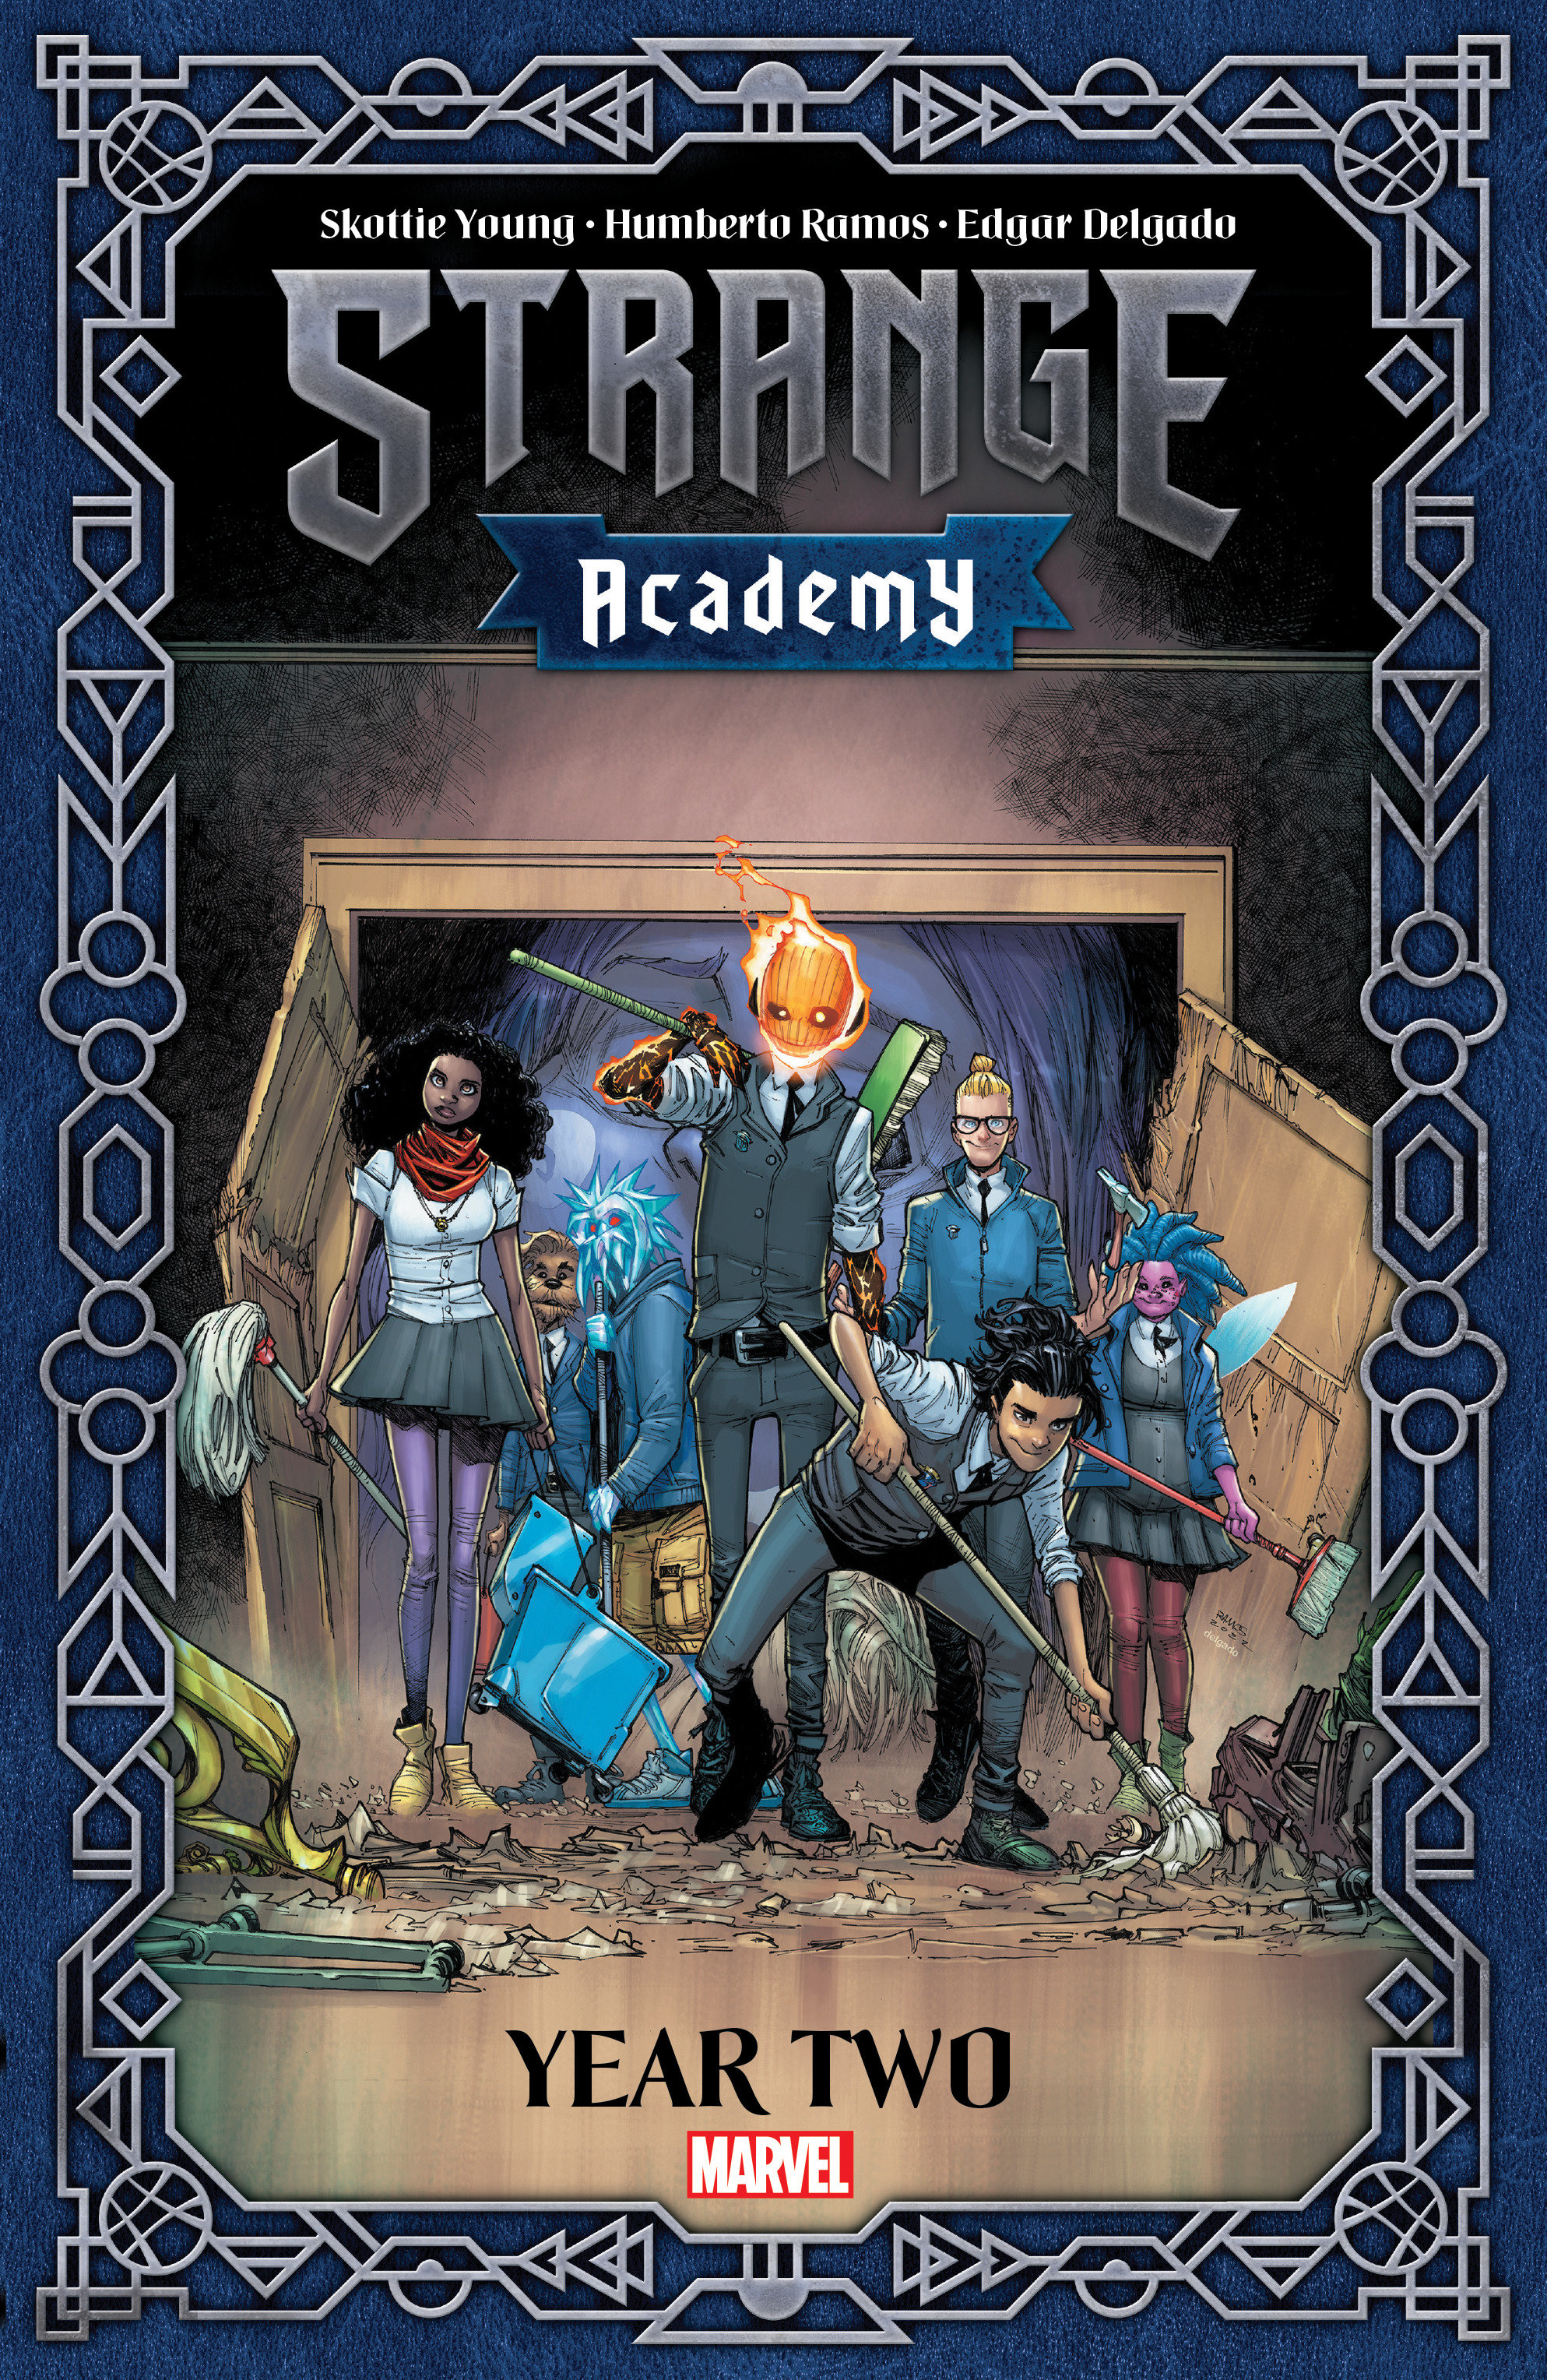 Strange Academy Graphic Novel Year Two